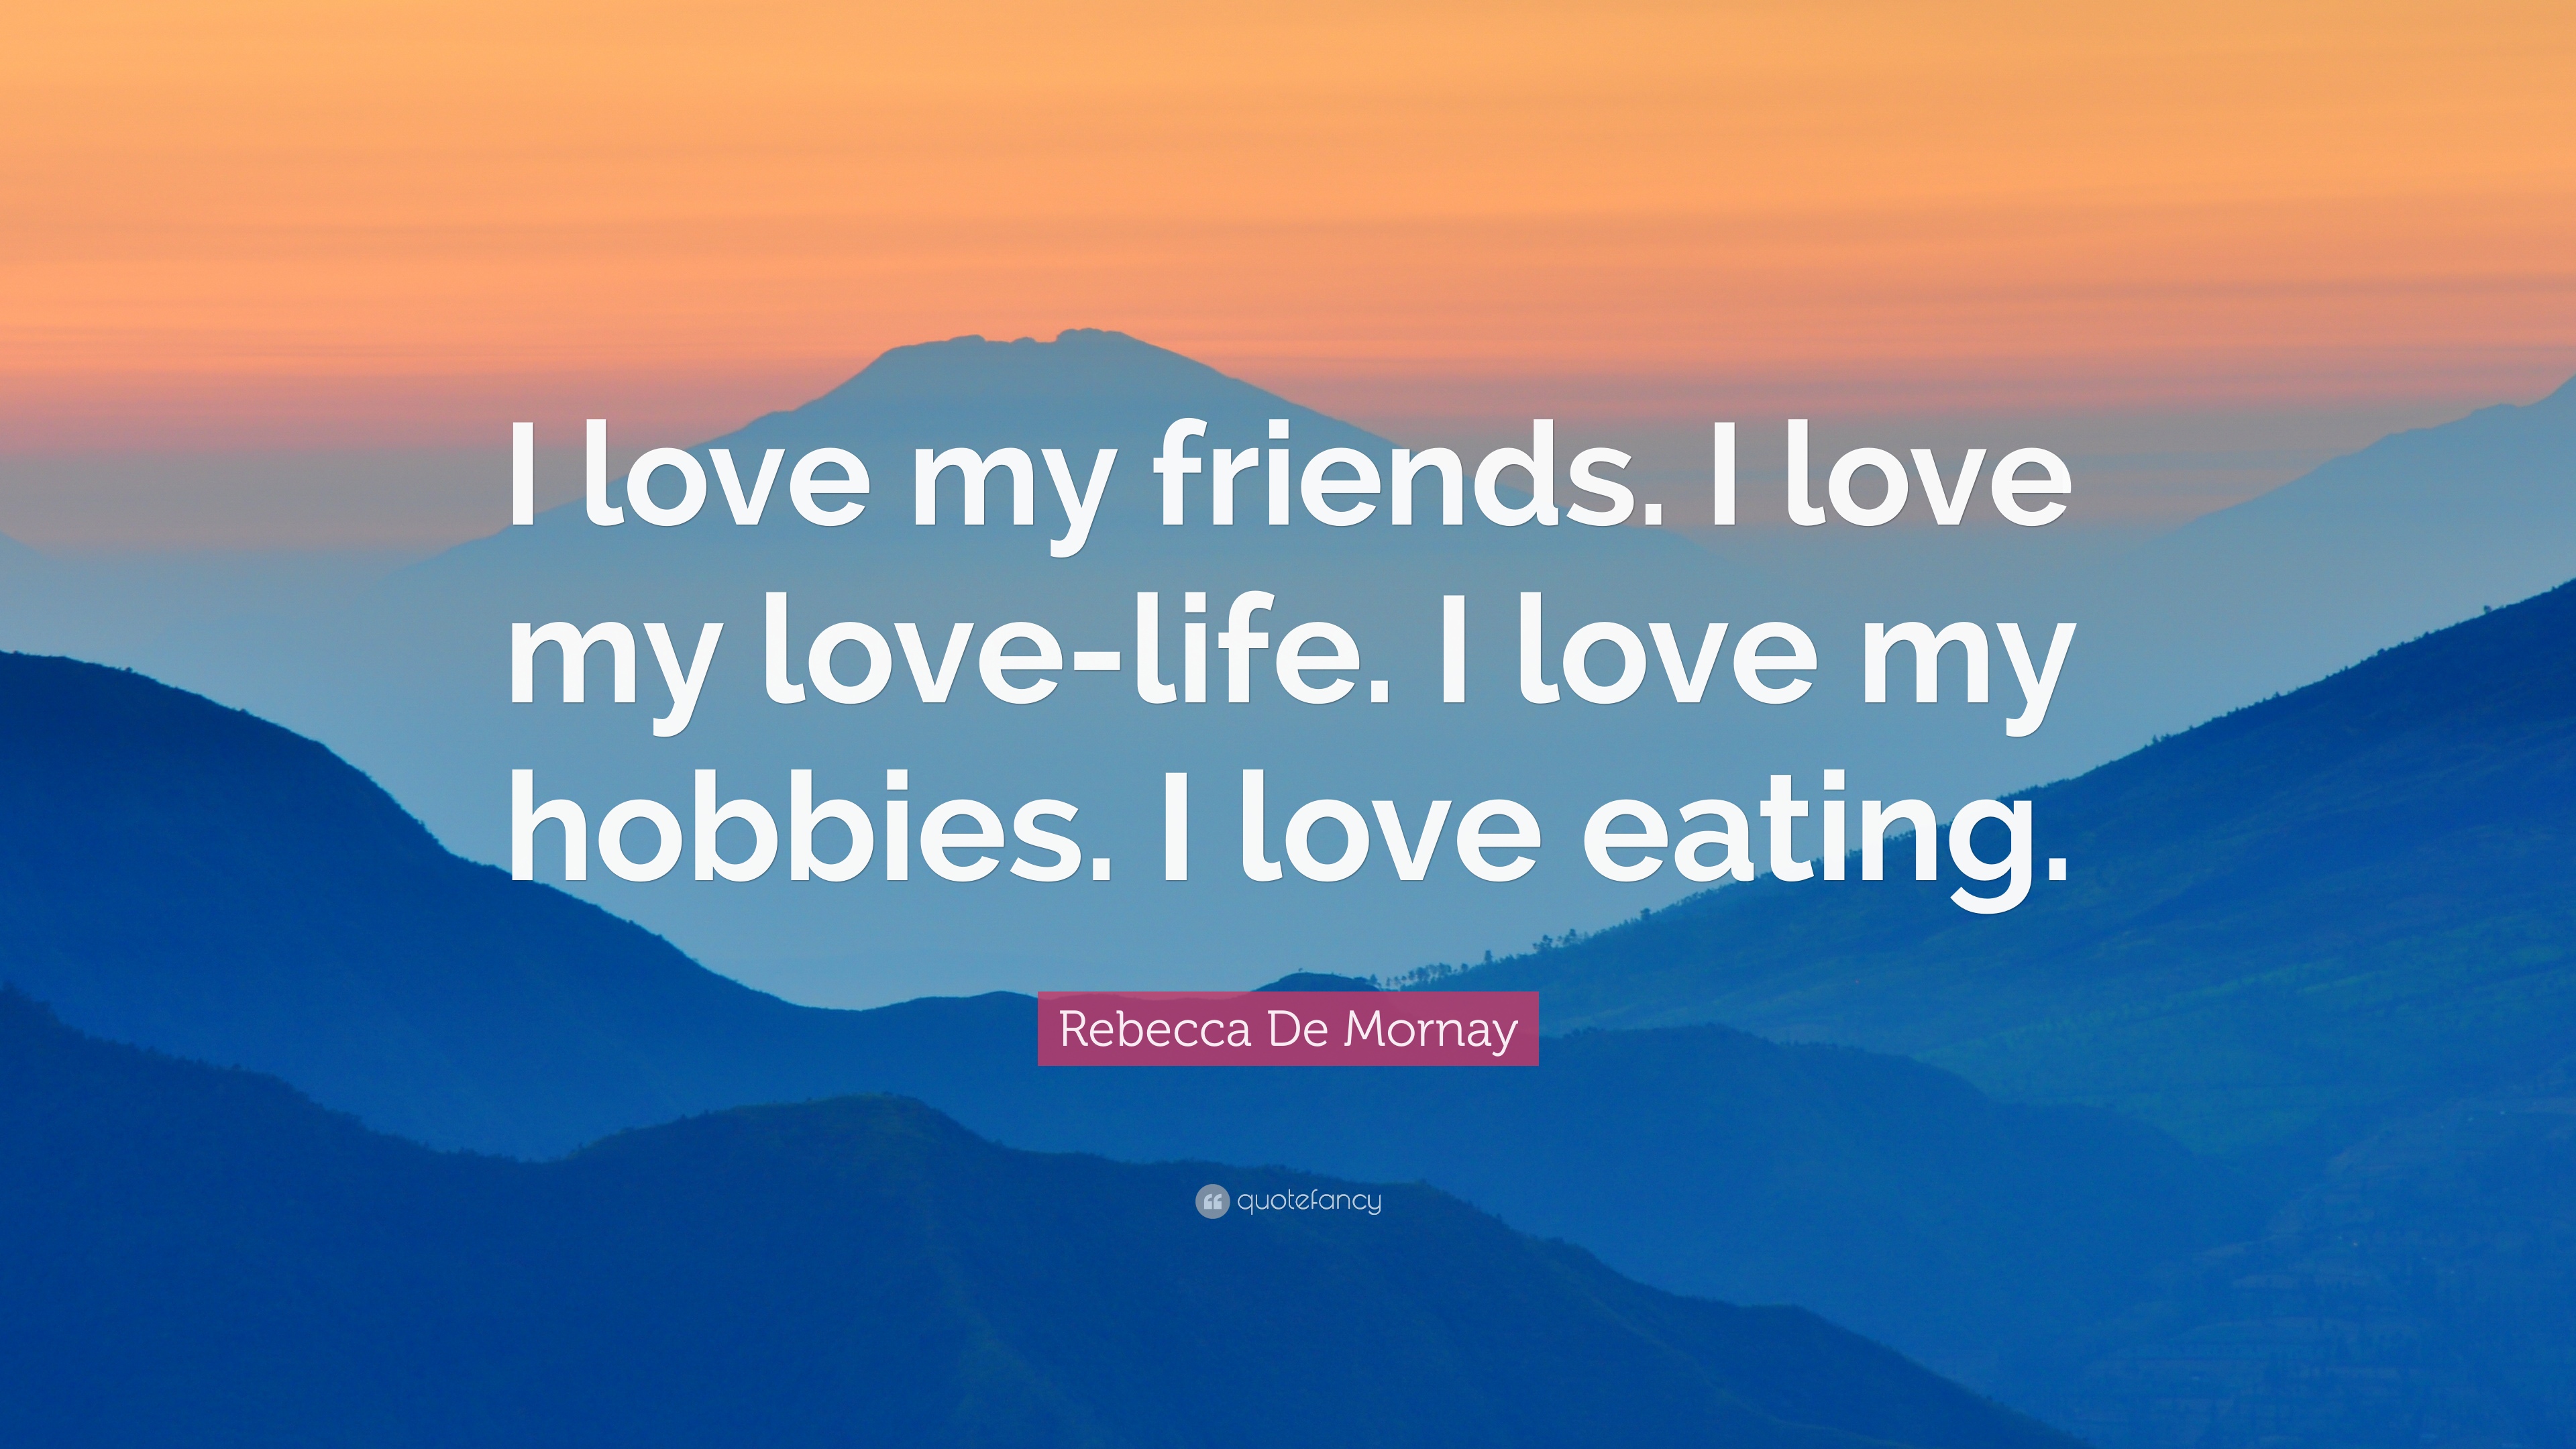 Rebecca De Mornay Quote: “I Love My Friends. I Love My Love Life. I